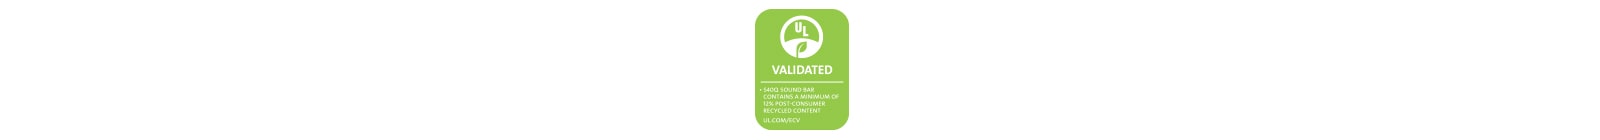 Jest pokazane logo UL VALIDATED.